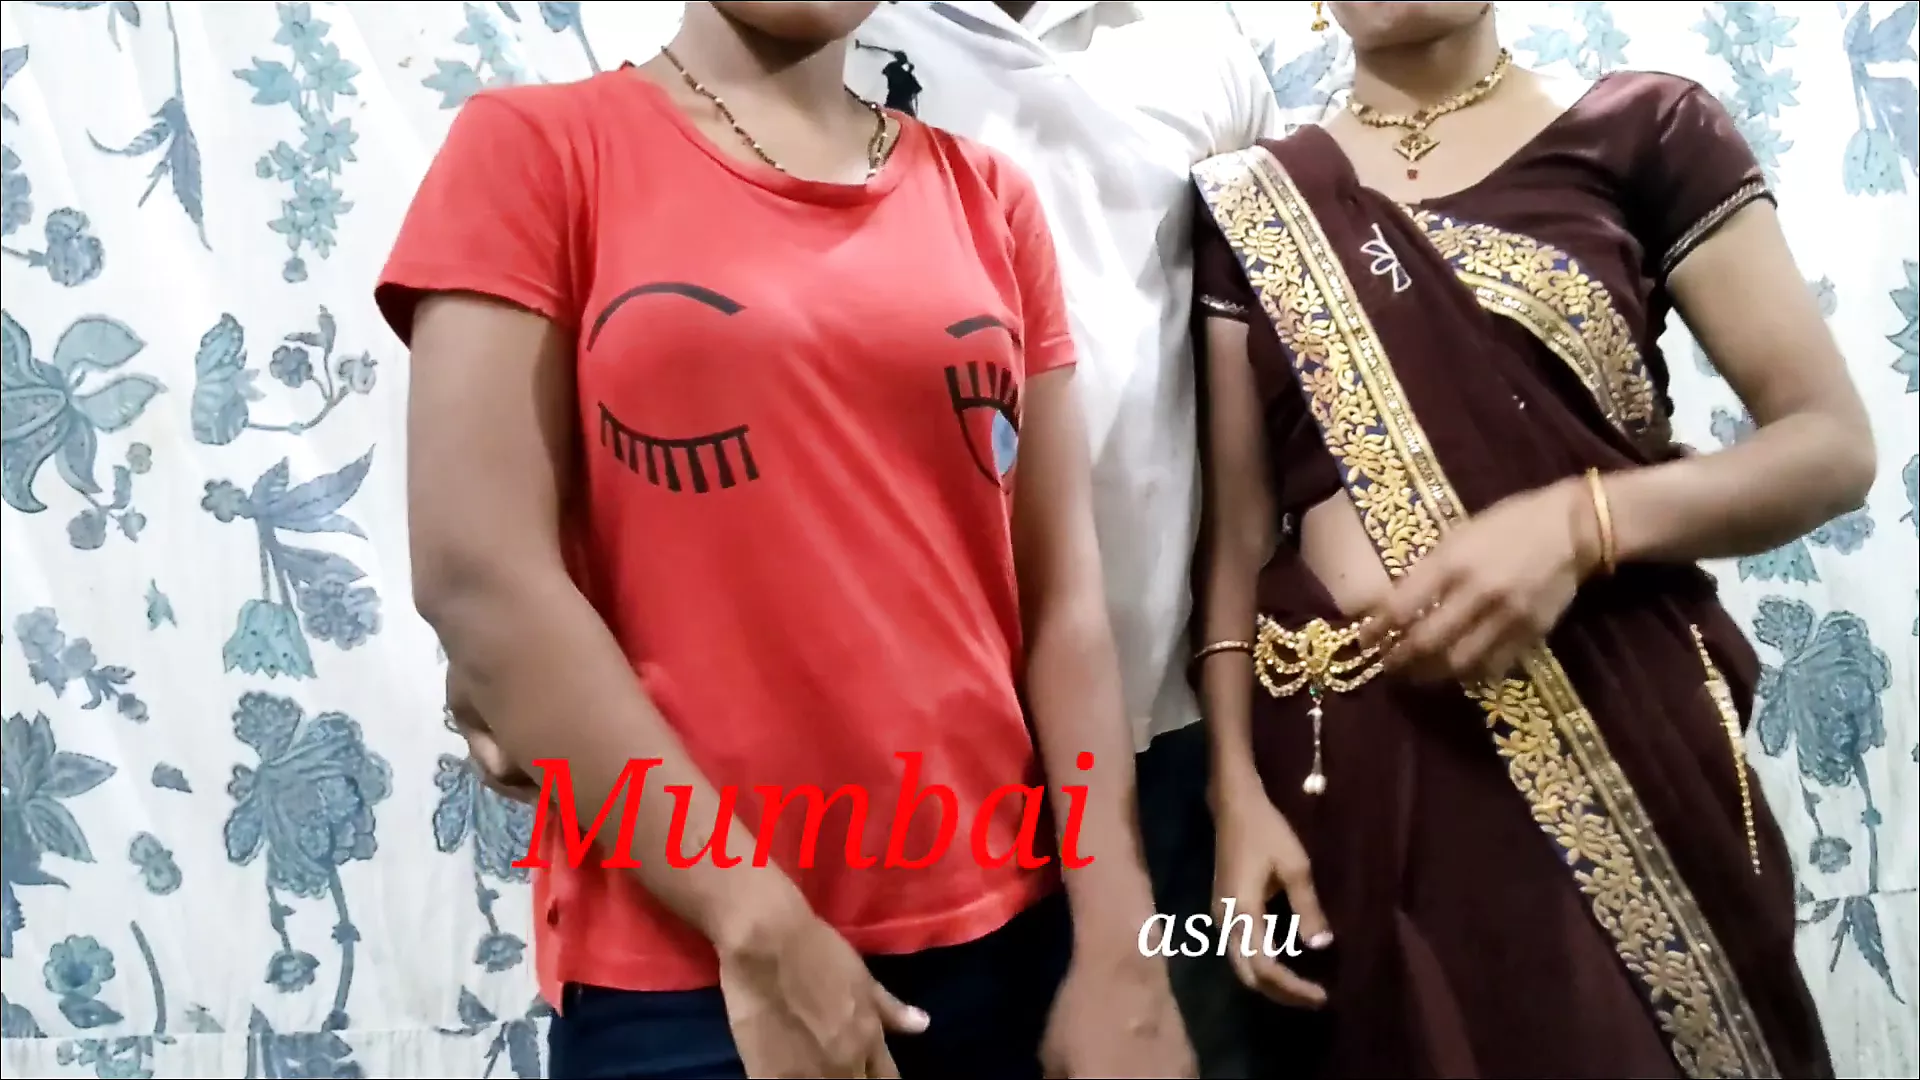 Indian Threesome Video Mumbai Ashu Sex Video Anal Sex | xHamster